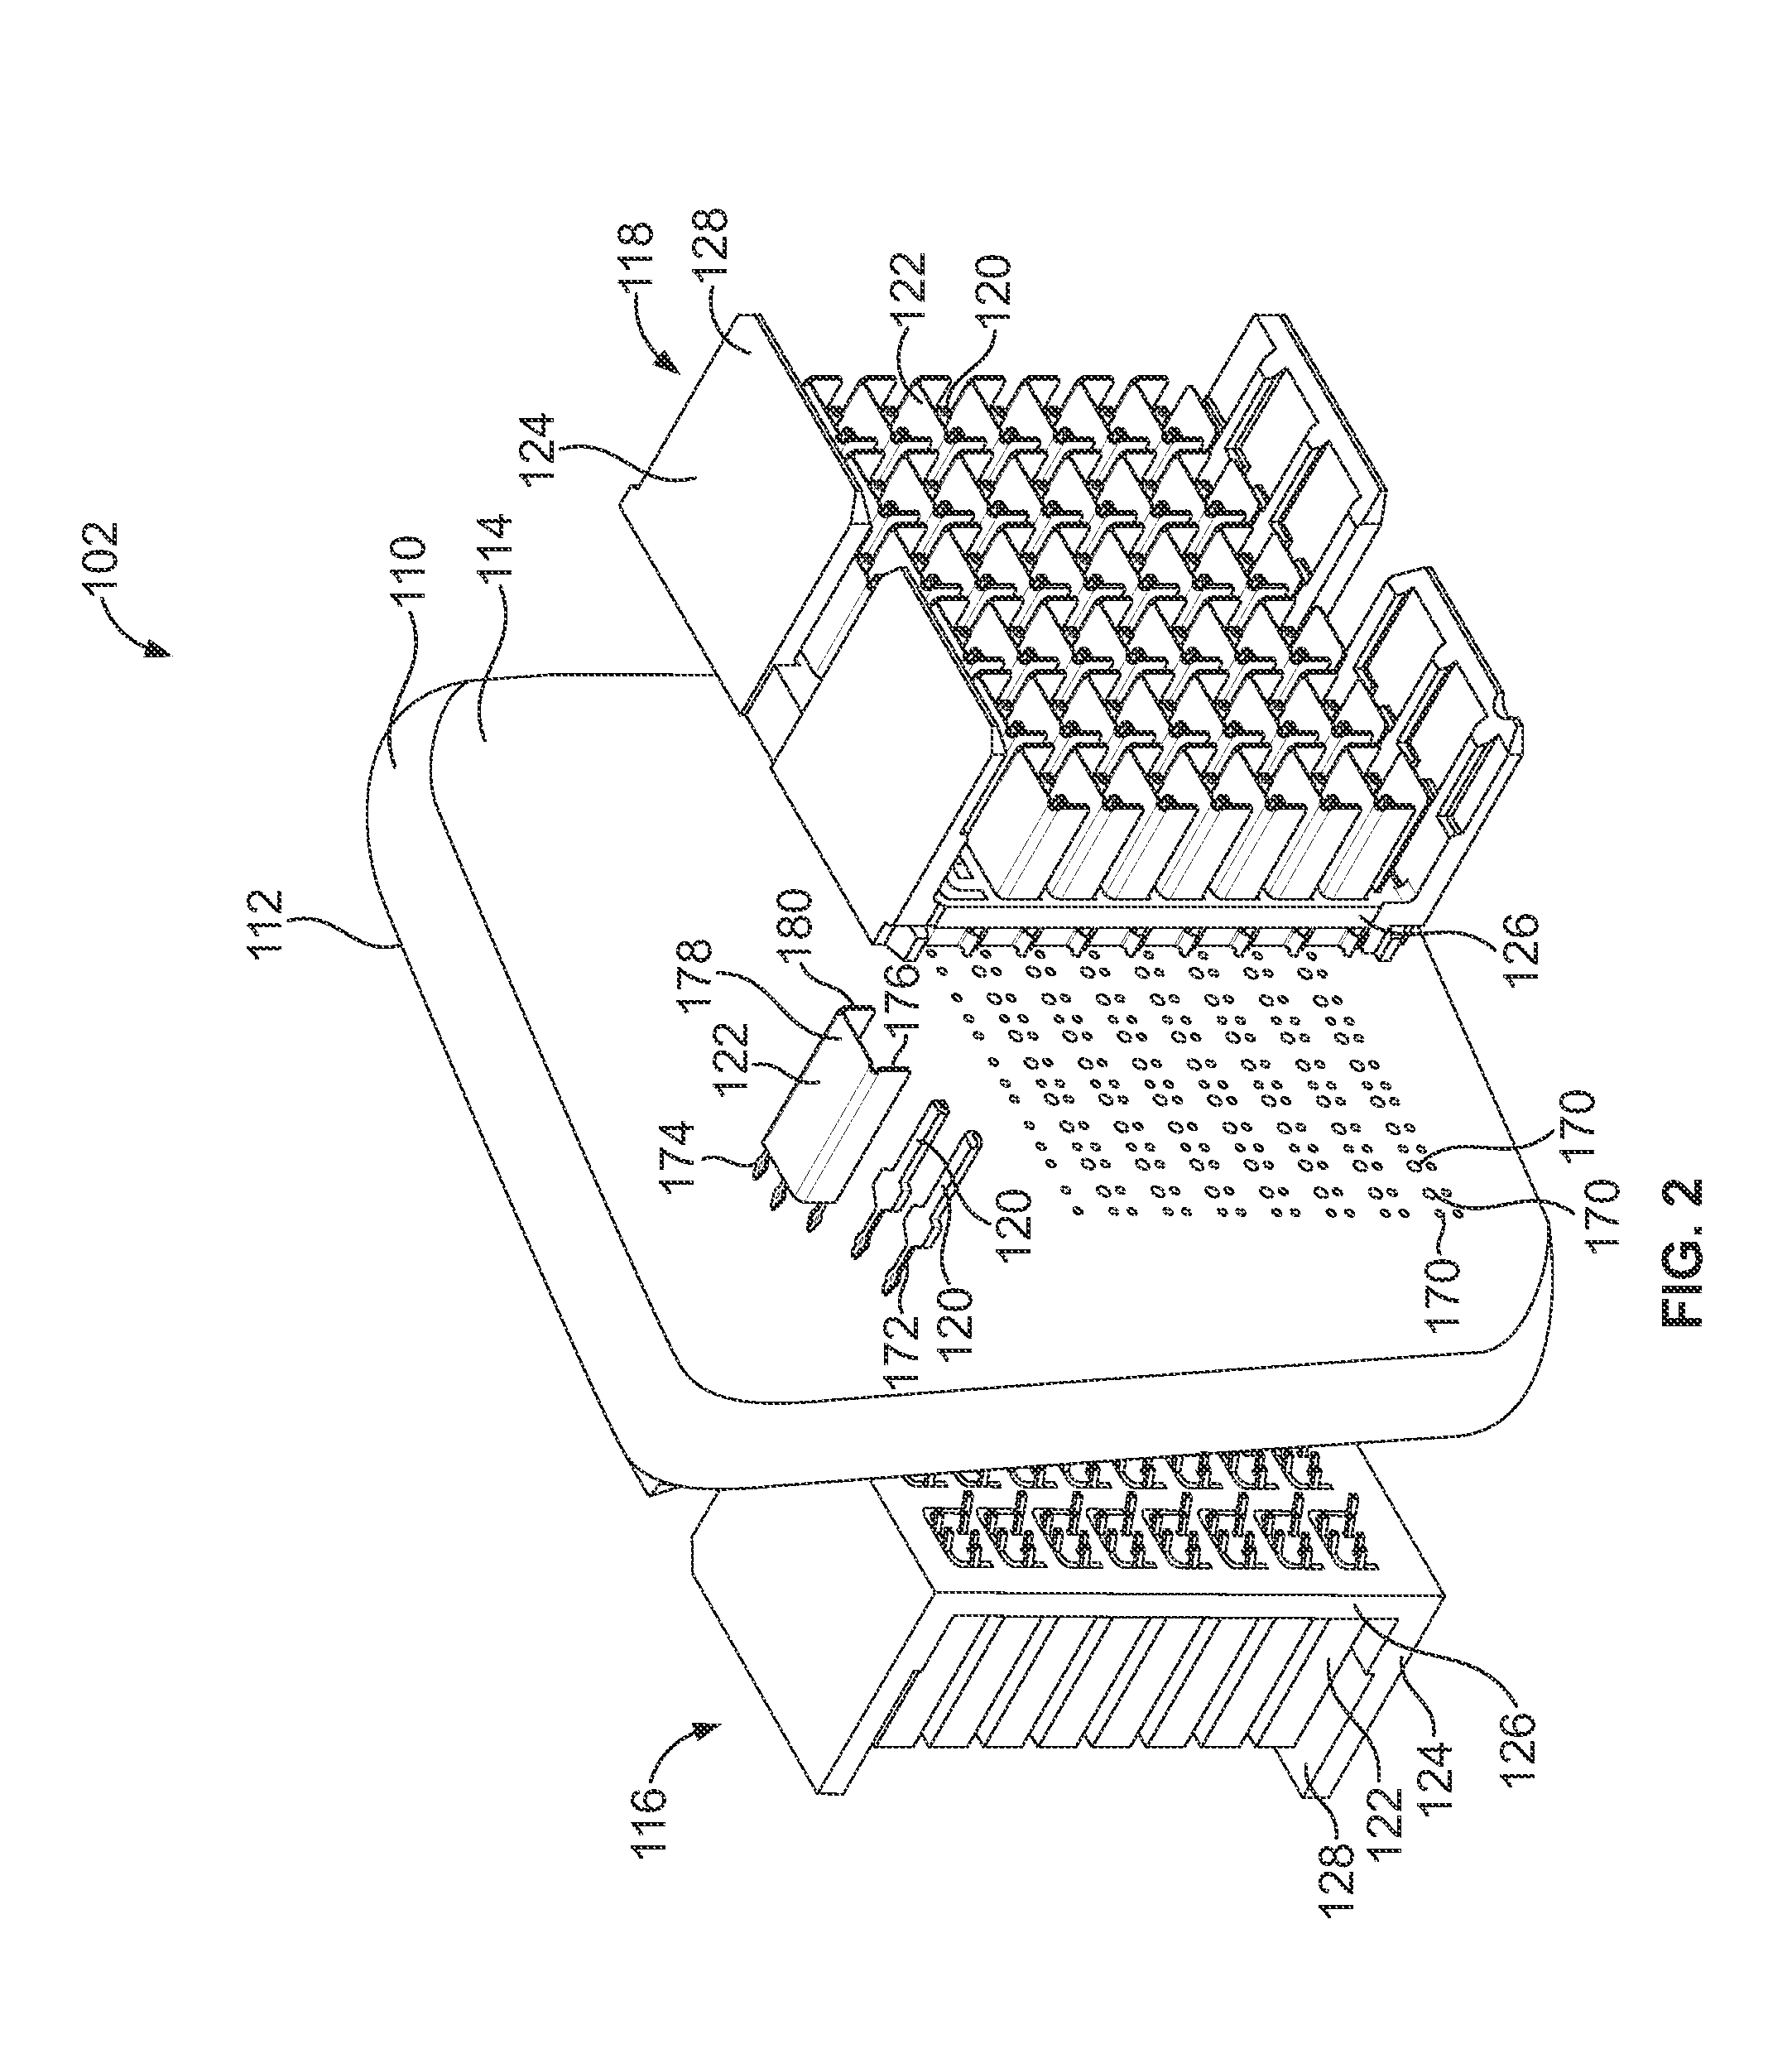 Midplane Orthogonal Connector System